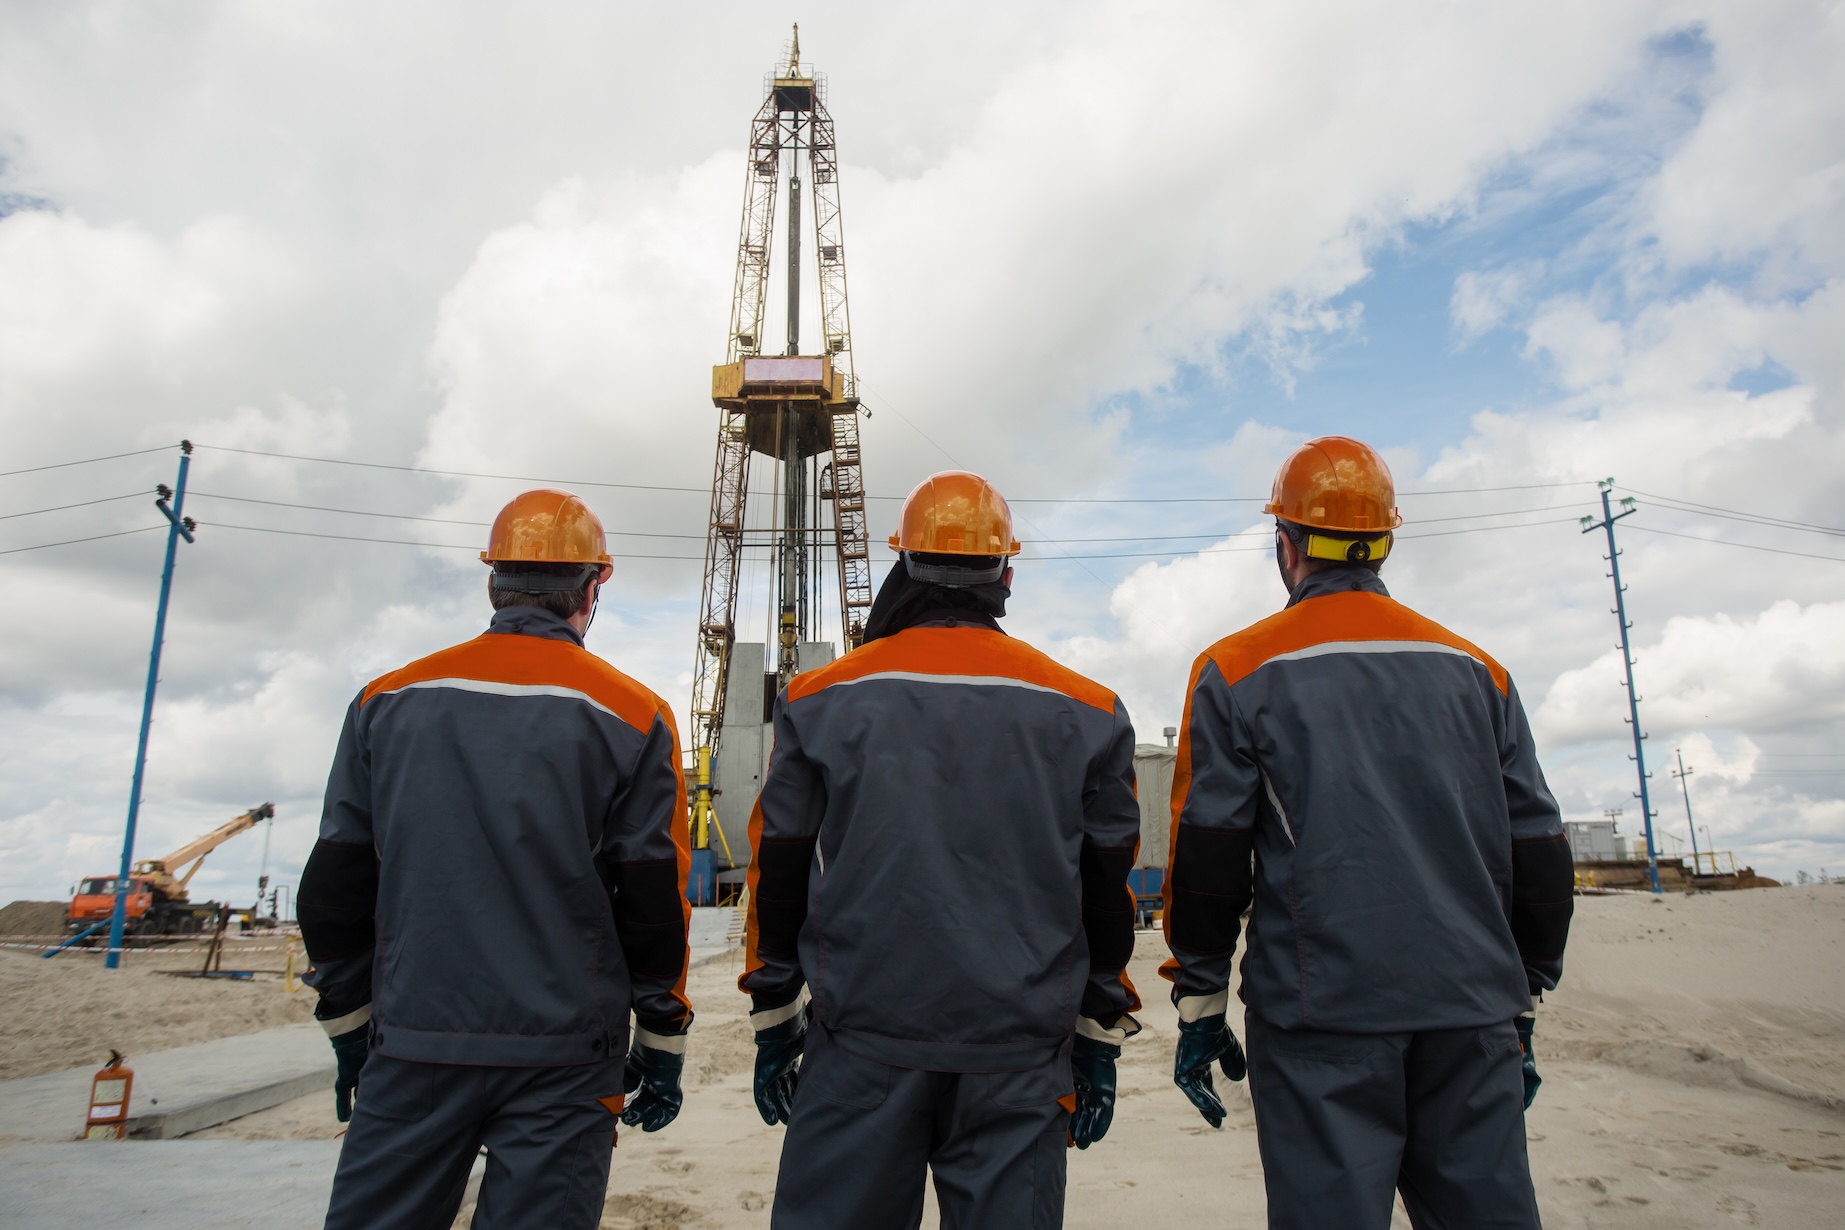 qatar-petrole-investissement-production-barils